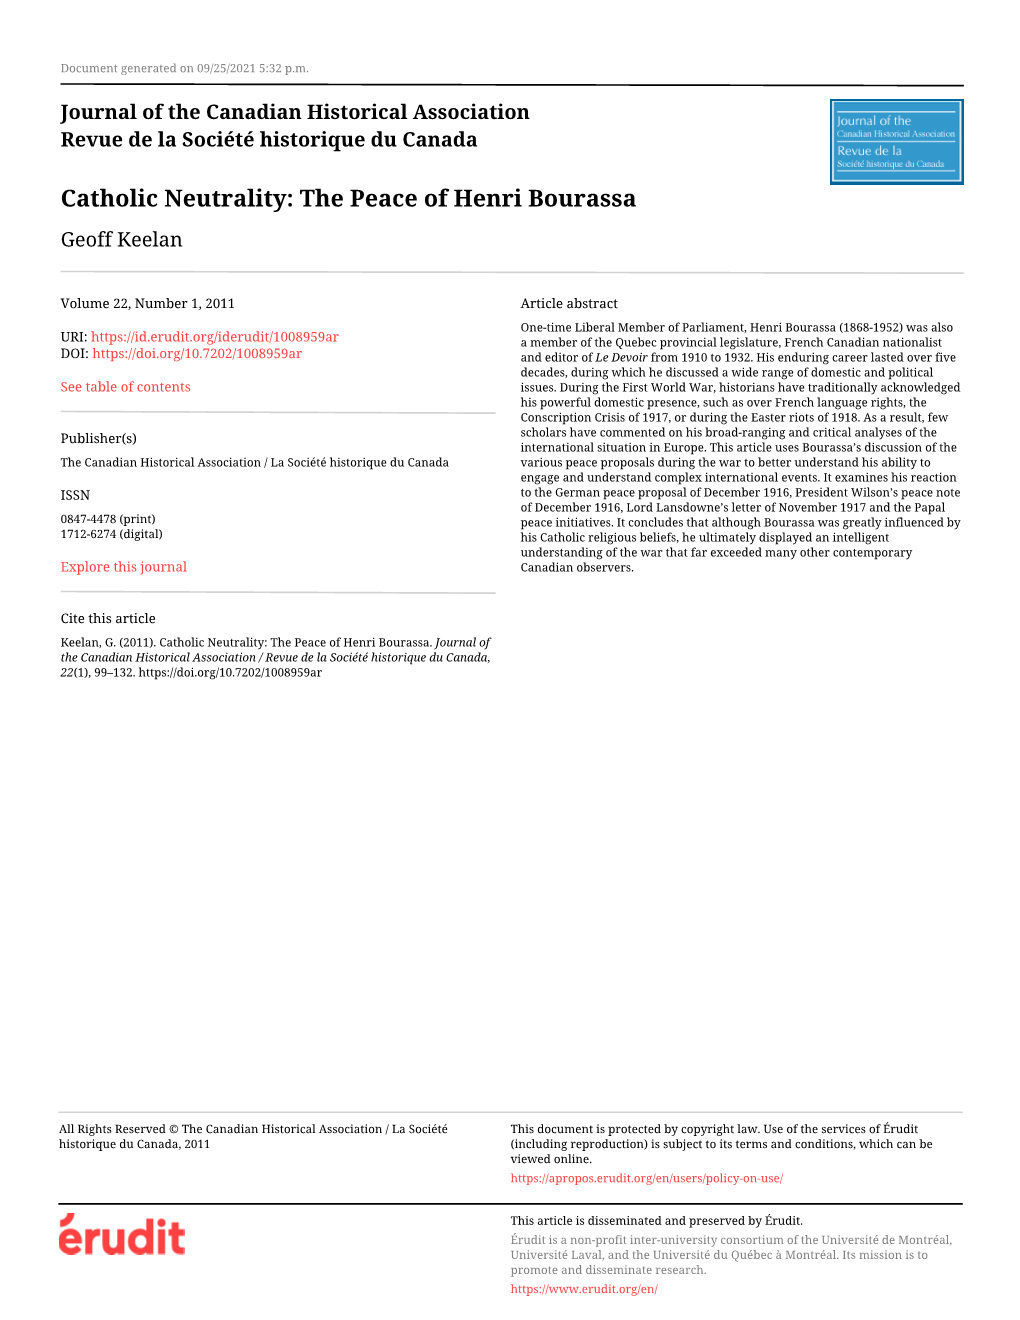 Catholic Neutrality: the Peace of Henri Bourassa Geoff Keelan